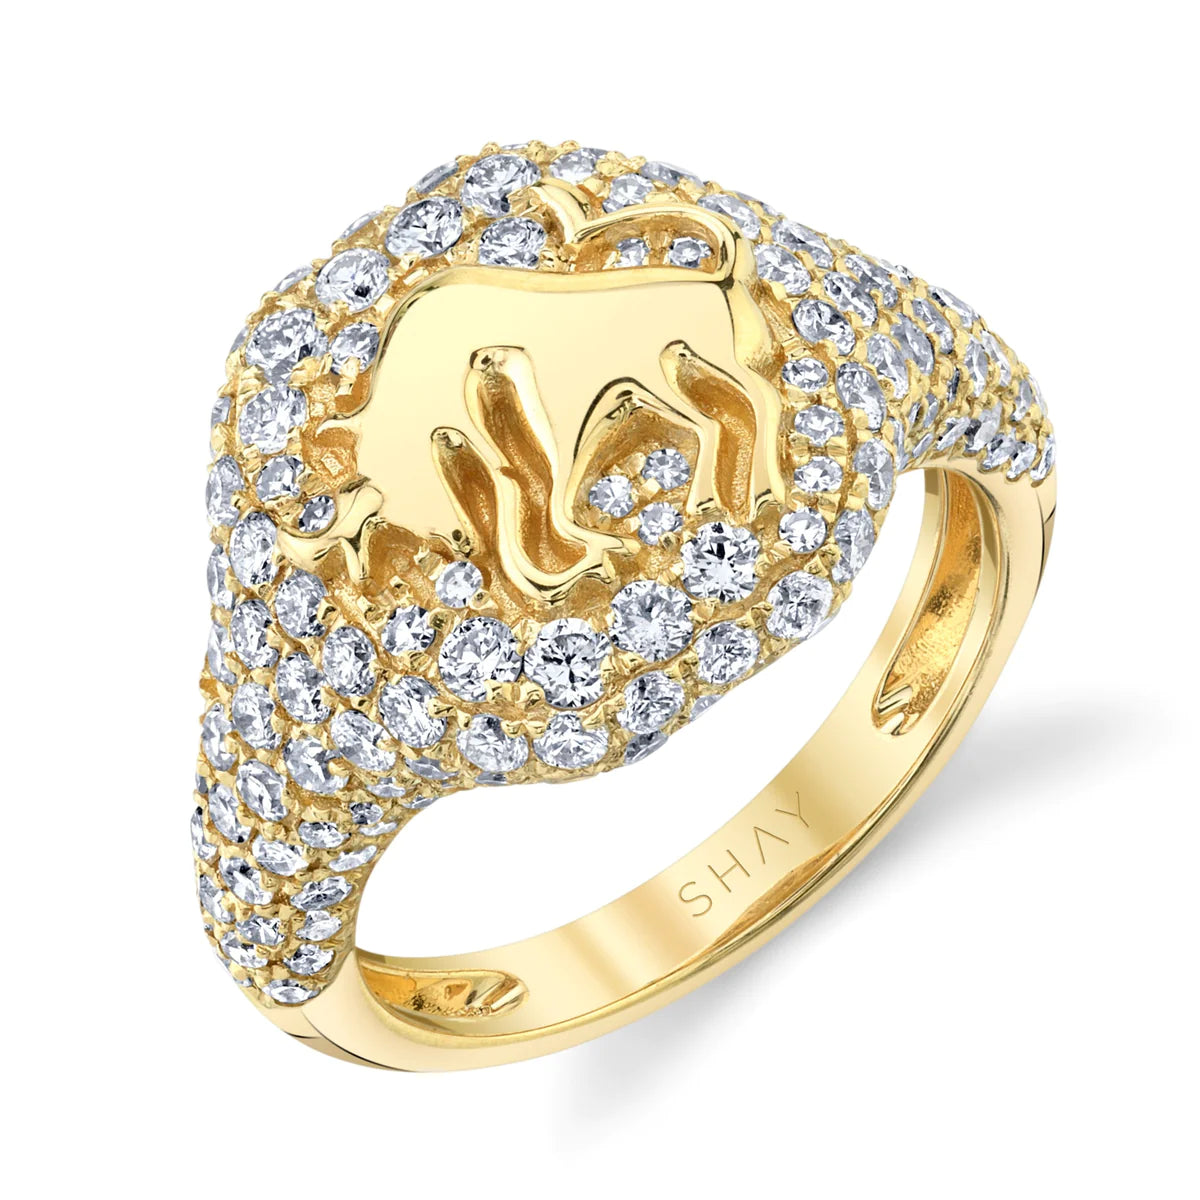 Pave Diamond Zodiac Pinky Ring